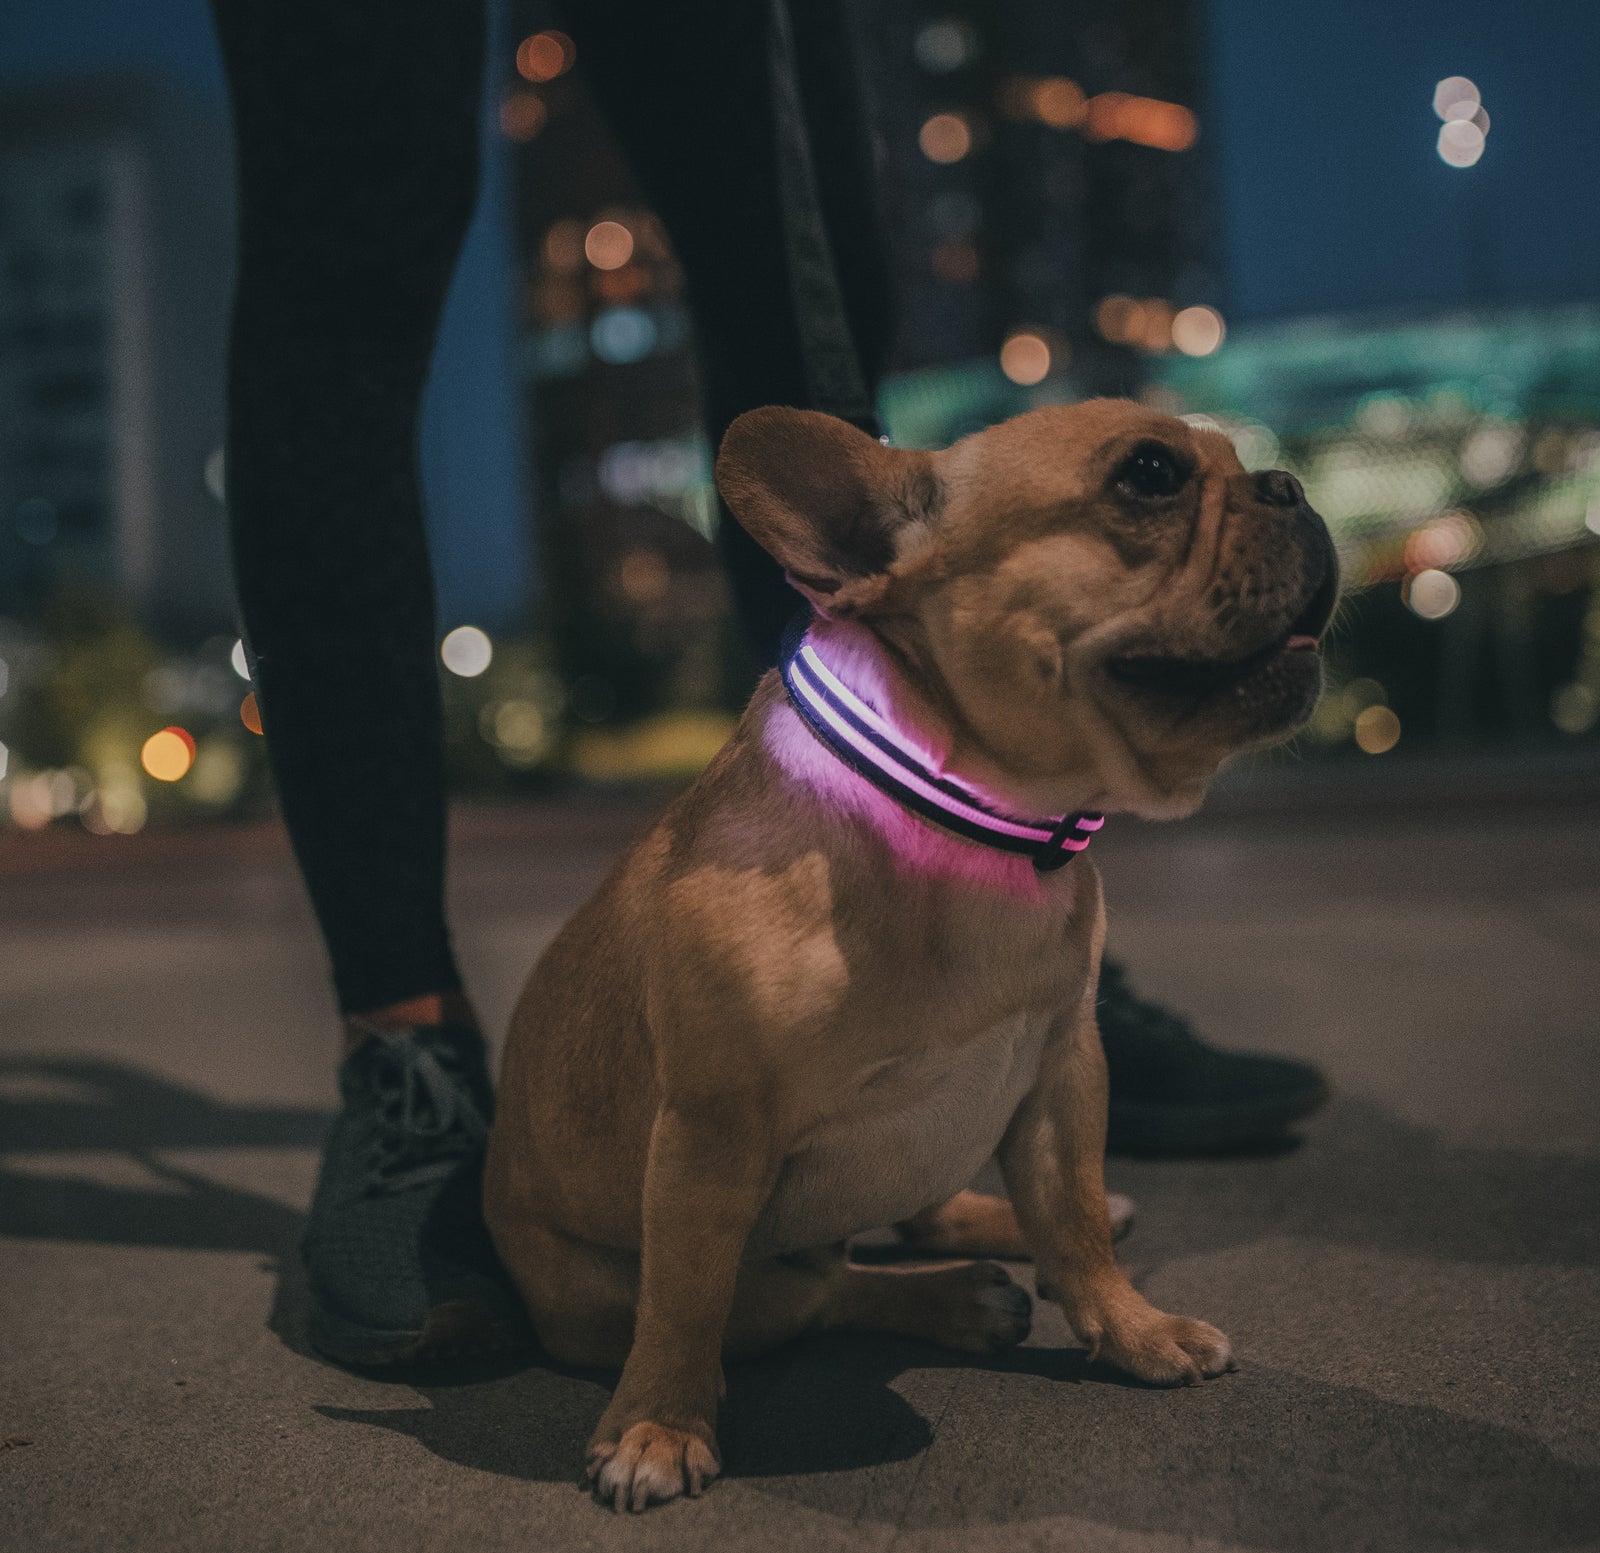 Dog with light up collar